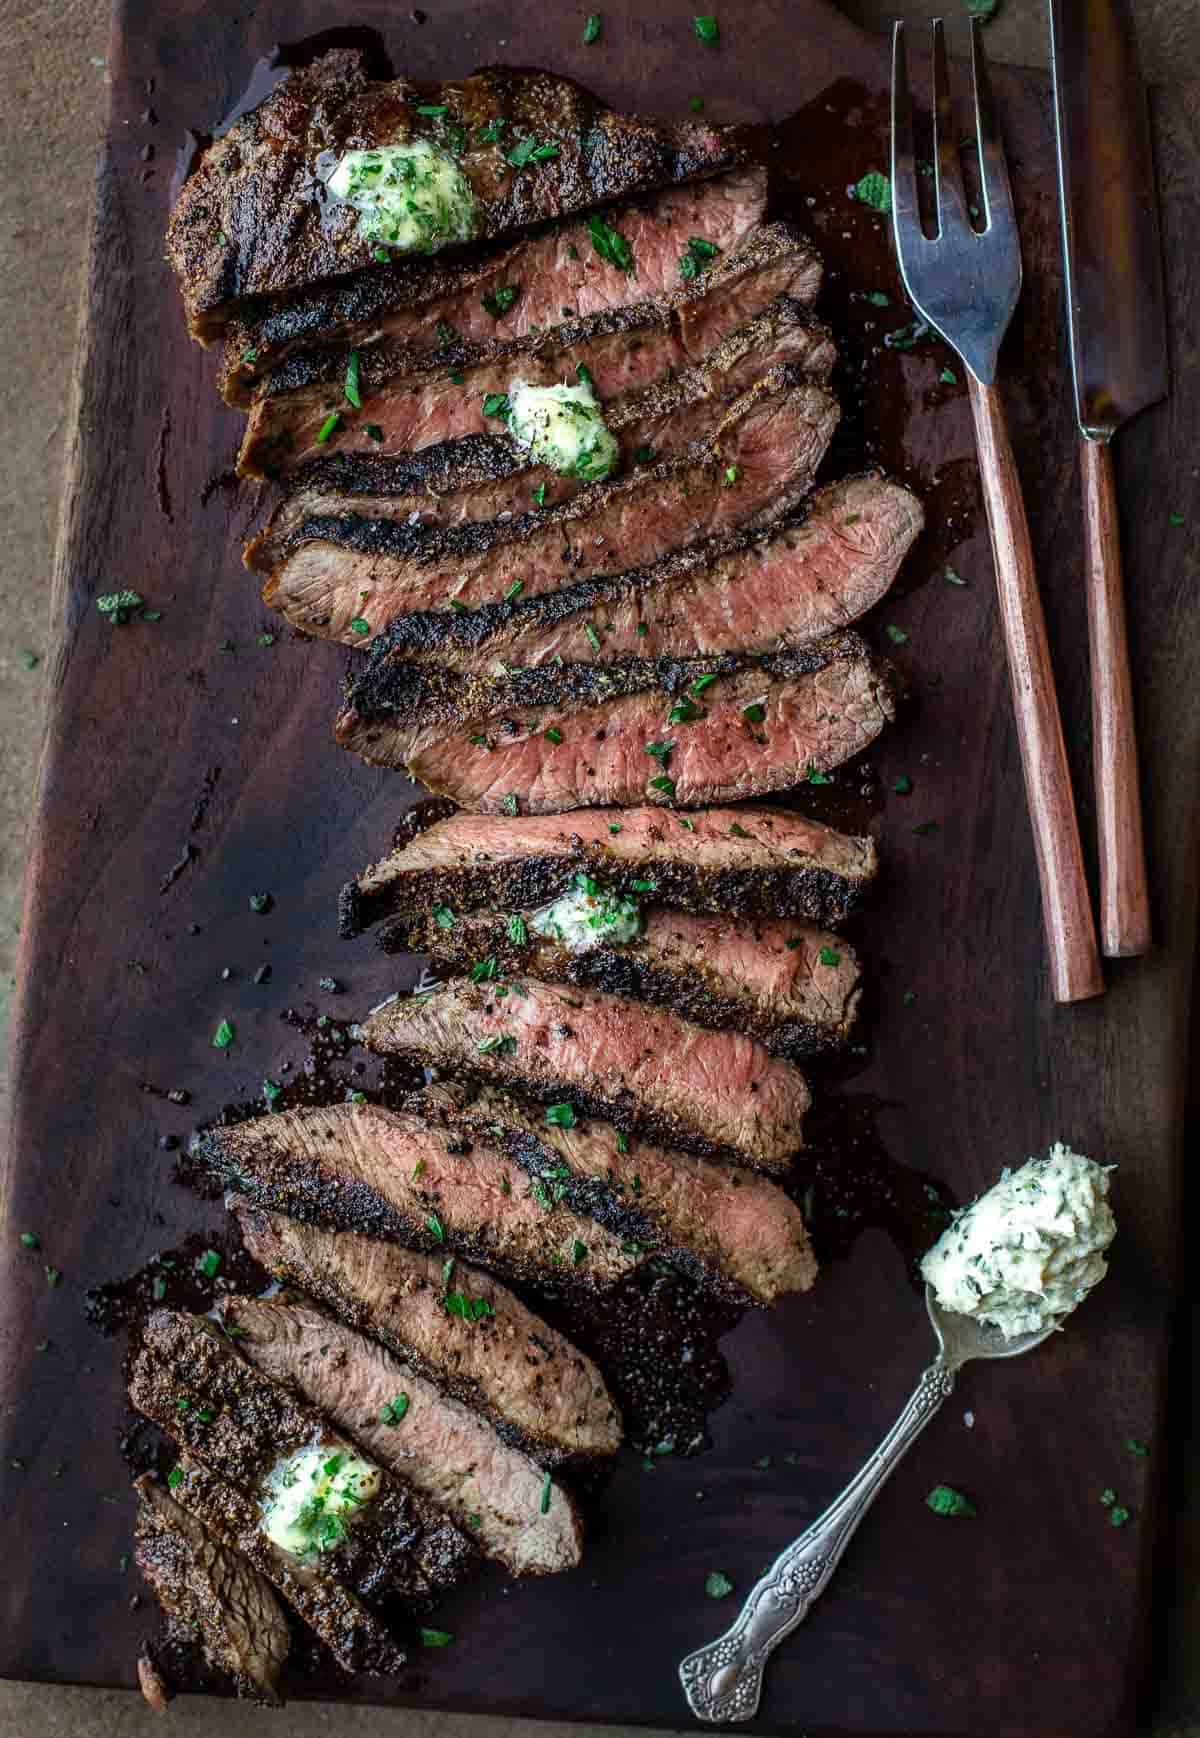 A Flat Iron Steak with Steak Dry Rub